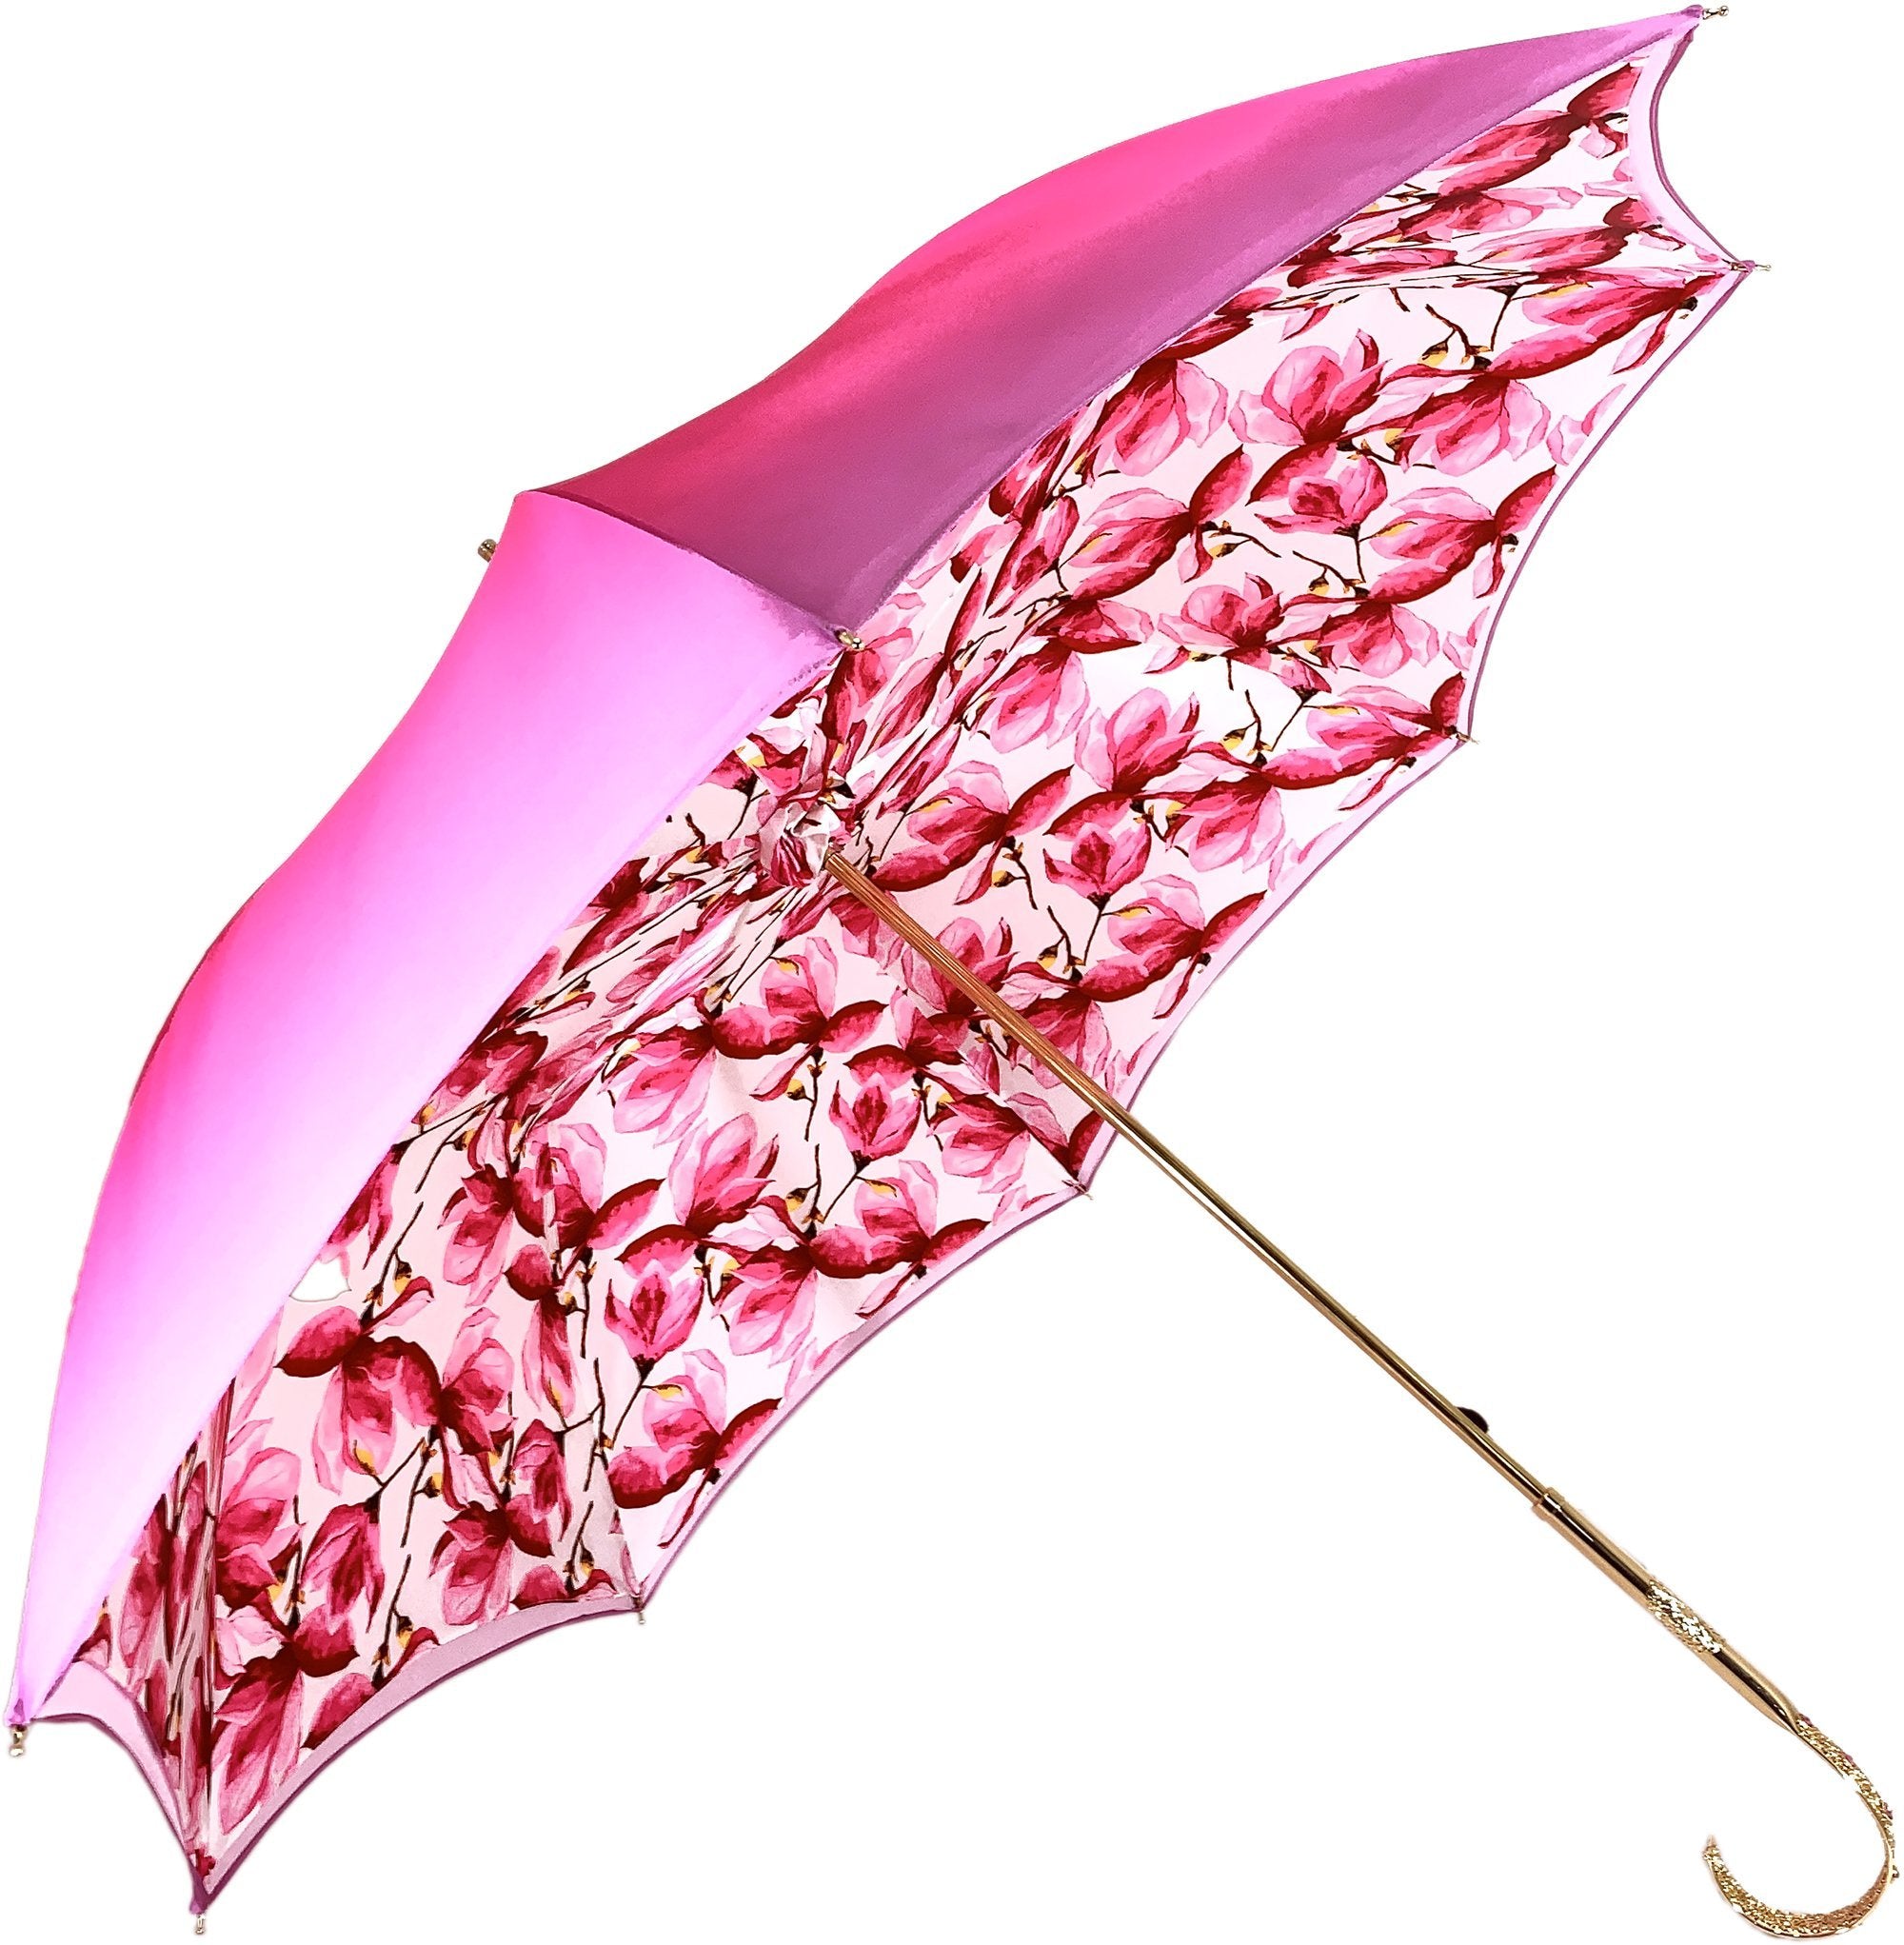 Lovely Shade Fuchsia/Pink Umbrella - Exclusive Flower Design - il-marchesato